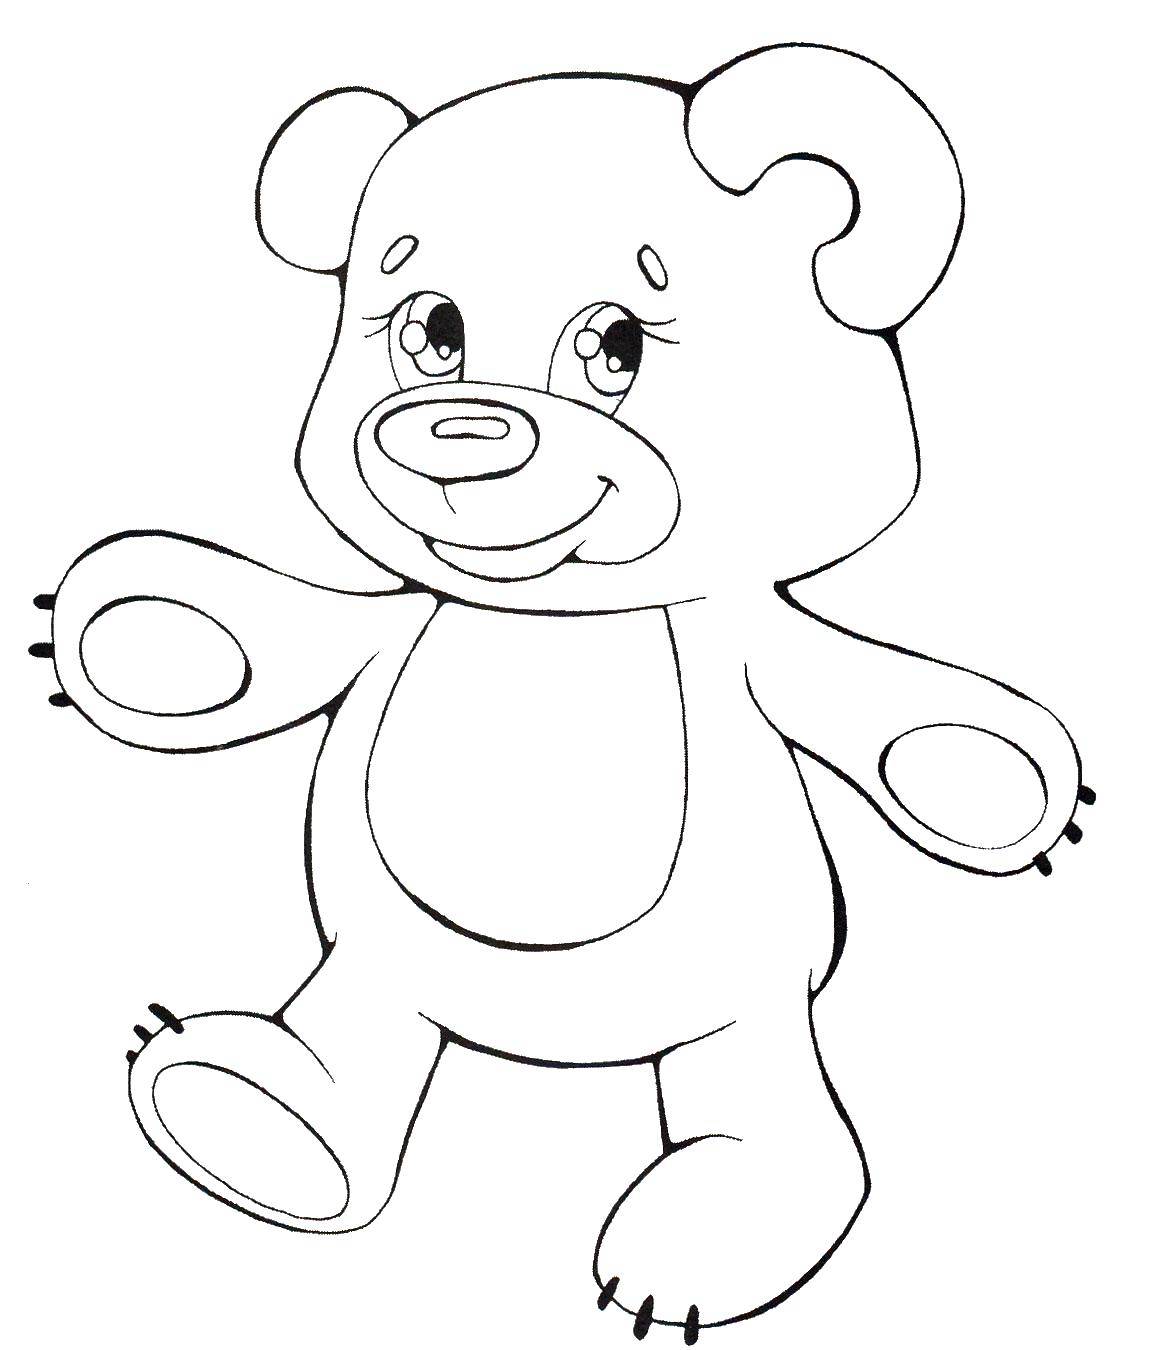 Coloring Bear. Category toys. Tags:  bear cub.